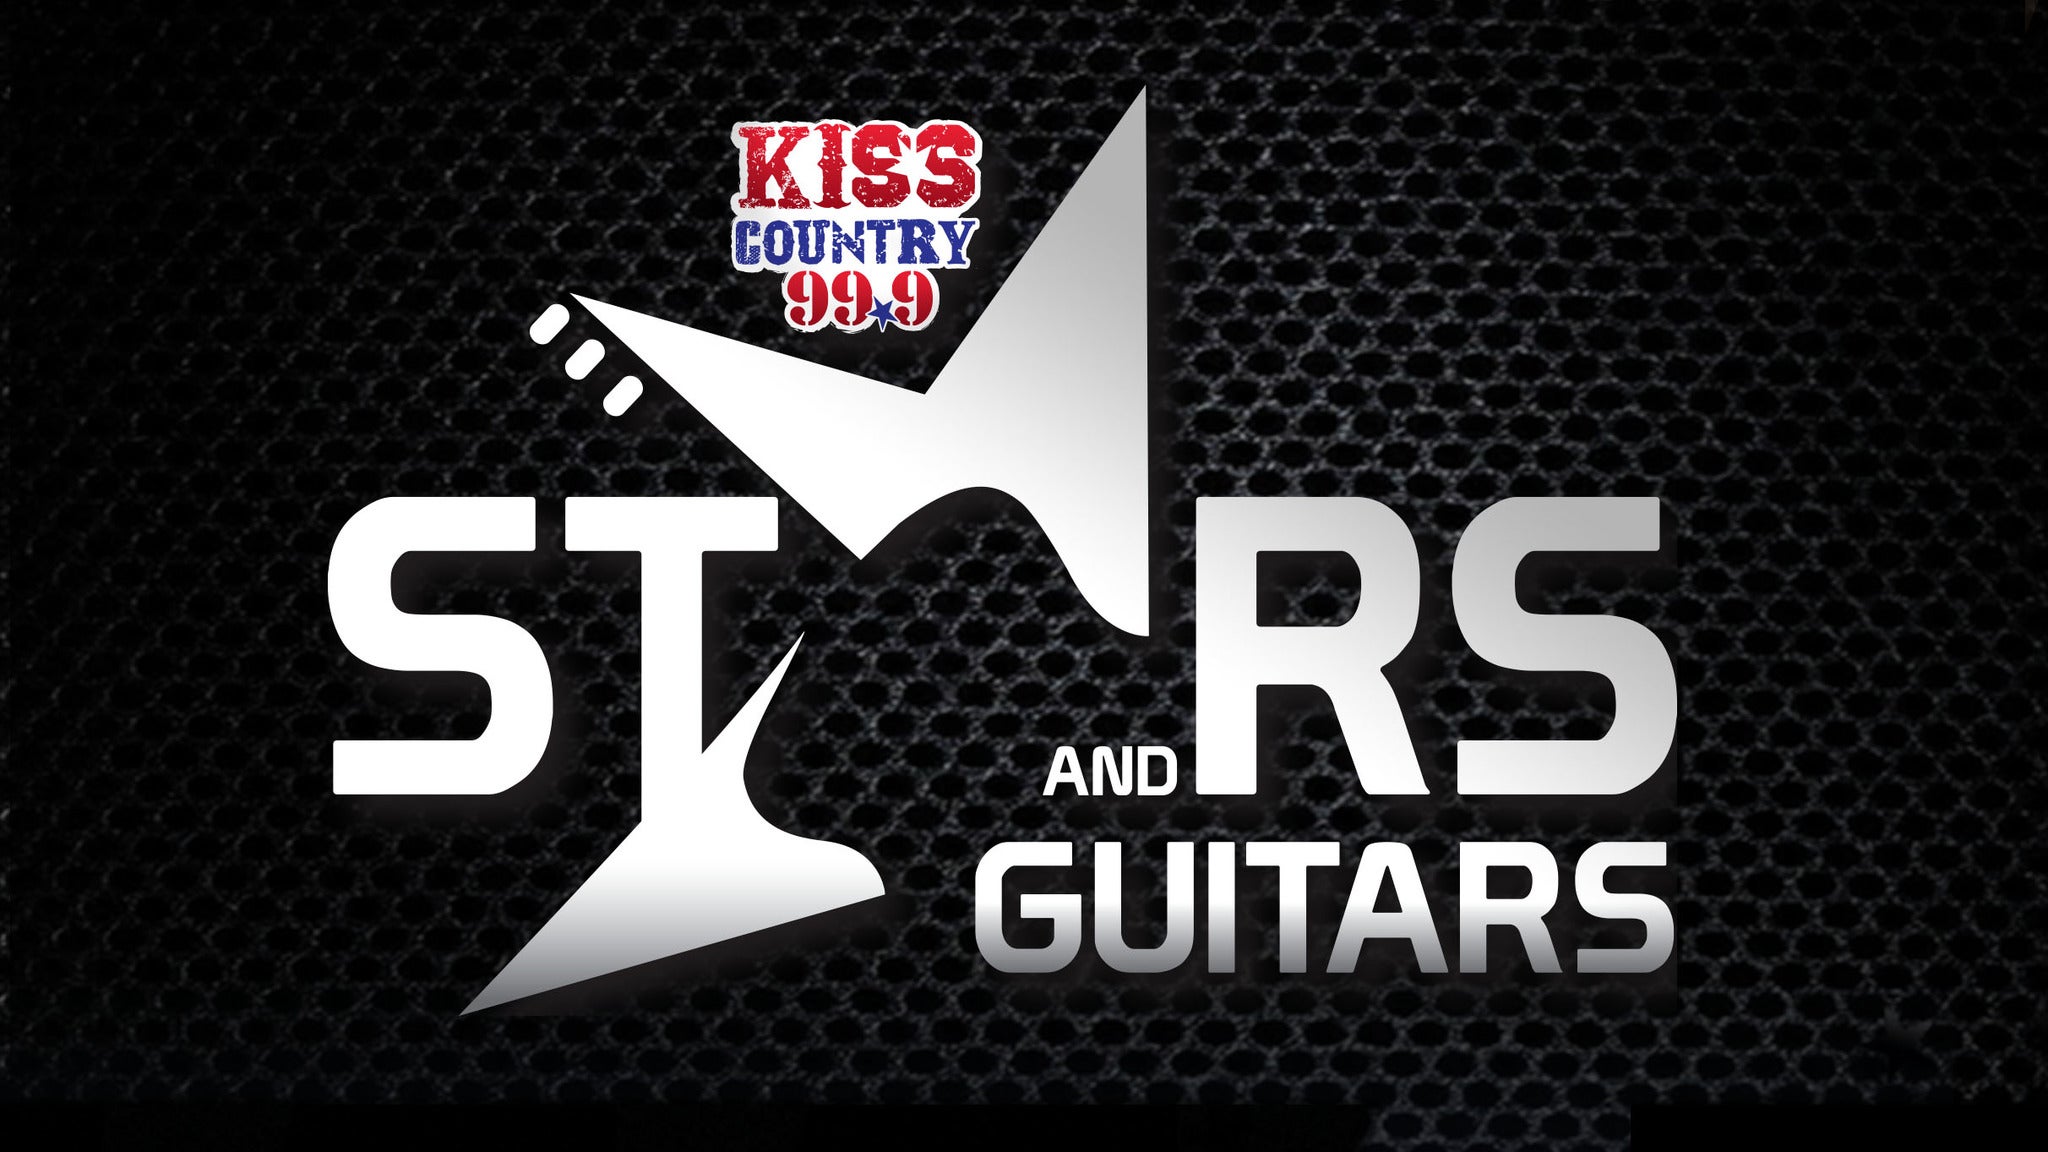 KISS COUNTRY 99.9 Stars &amp; Guitars presale information on freepresalepasswords.com